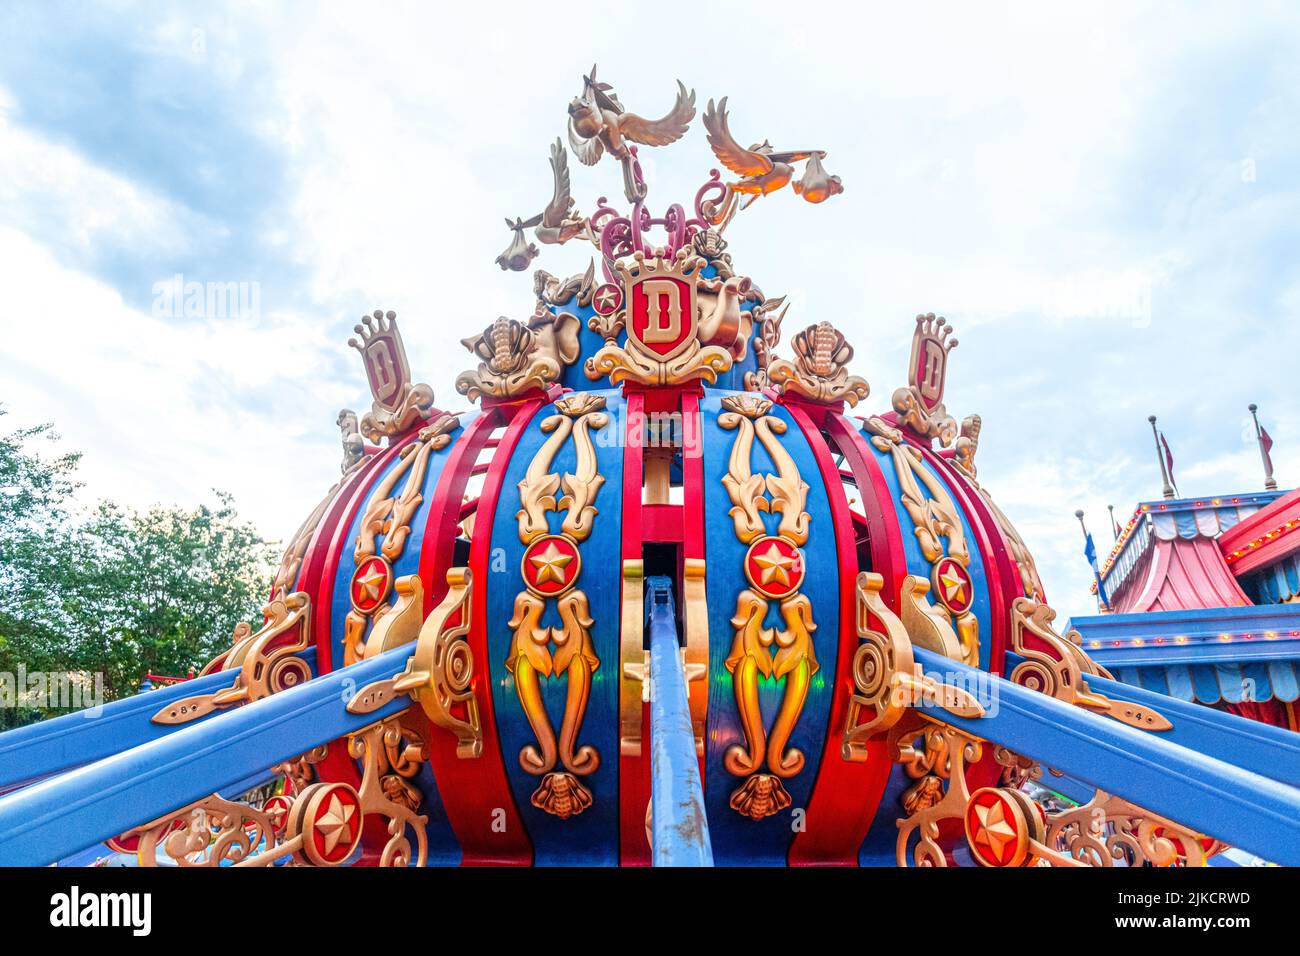 Amusement park ride named Dumbo The Flying Elephant. Stock Photo